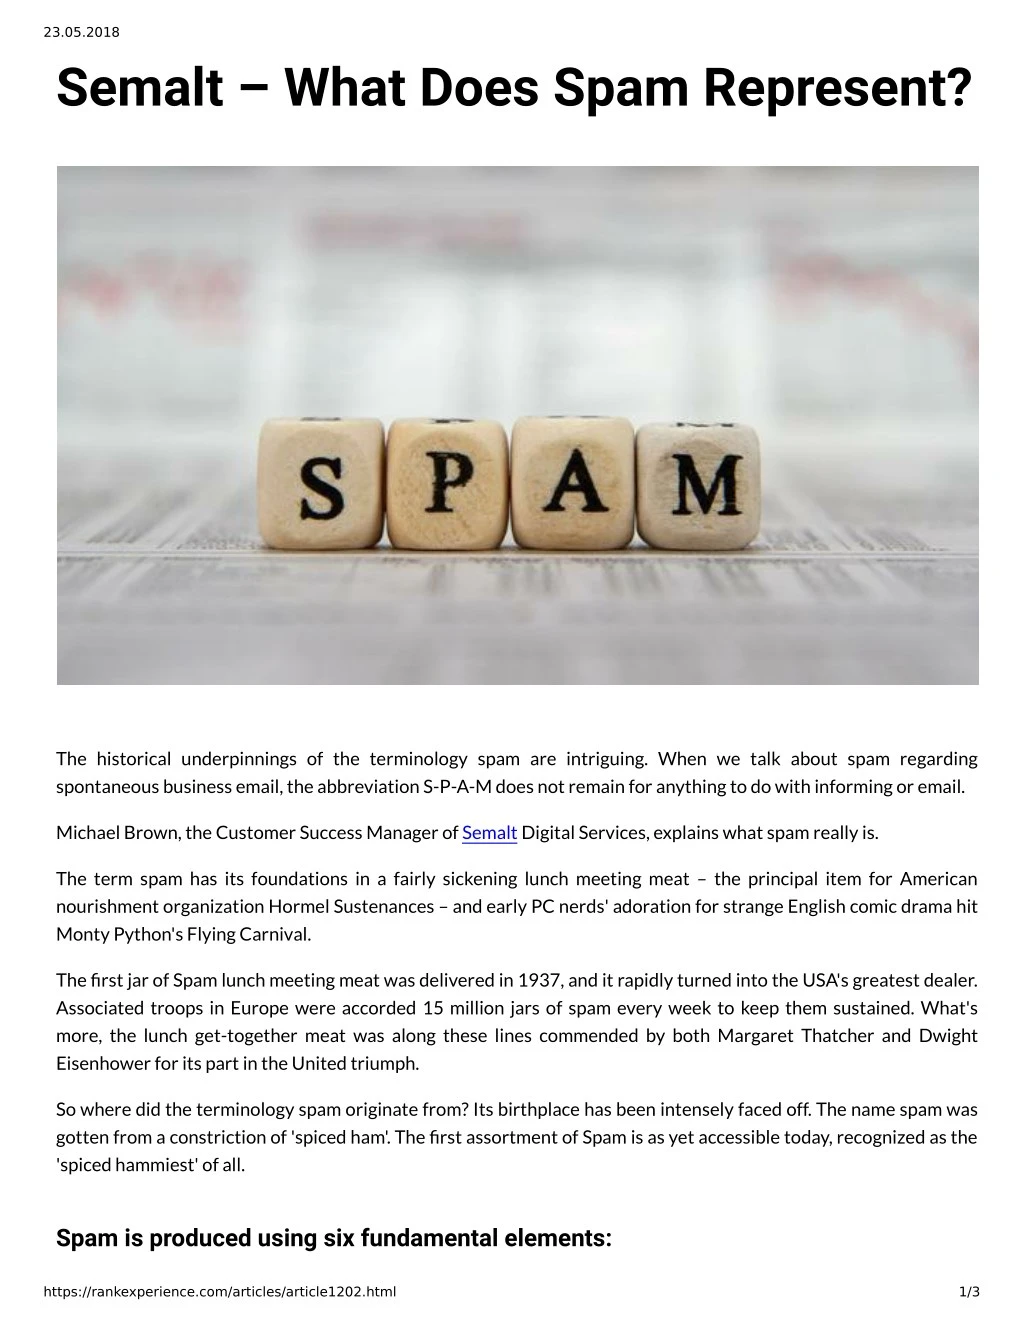 23 05 2018 semalt what does spam represent